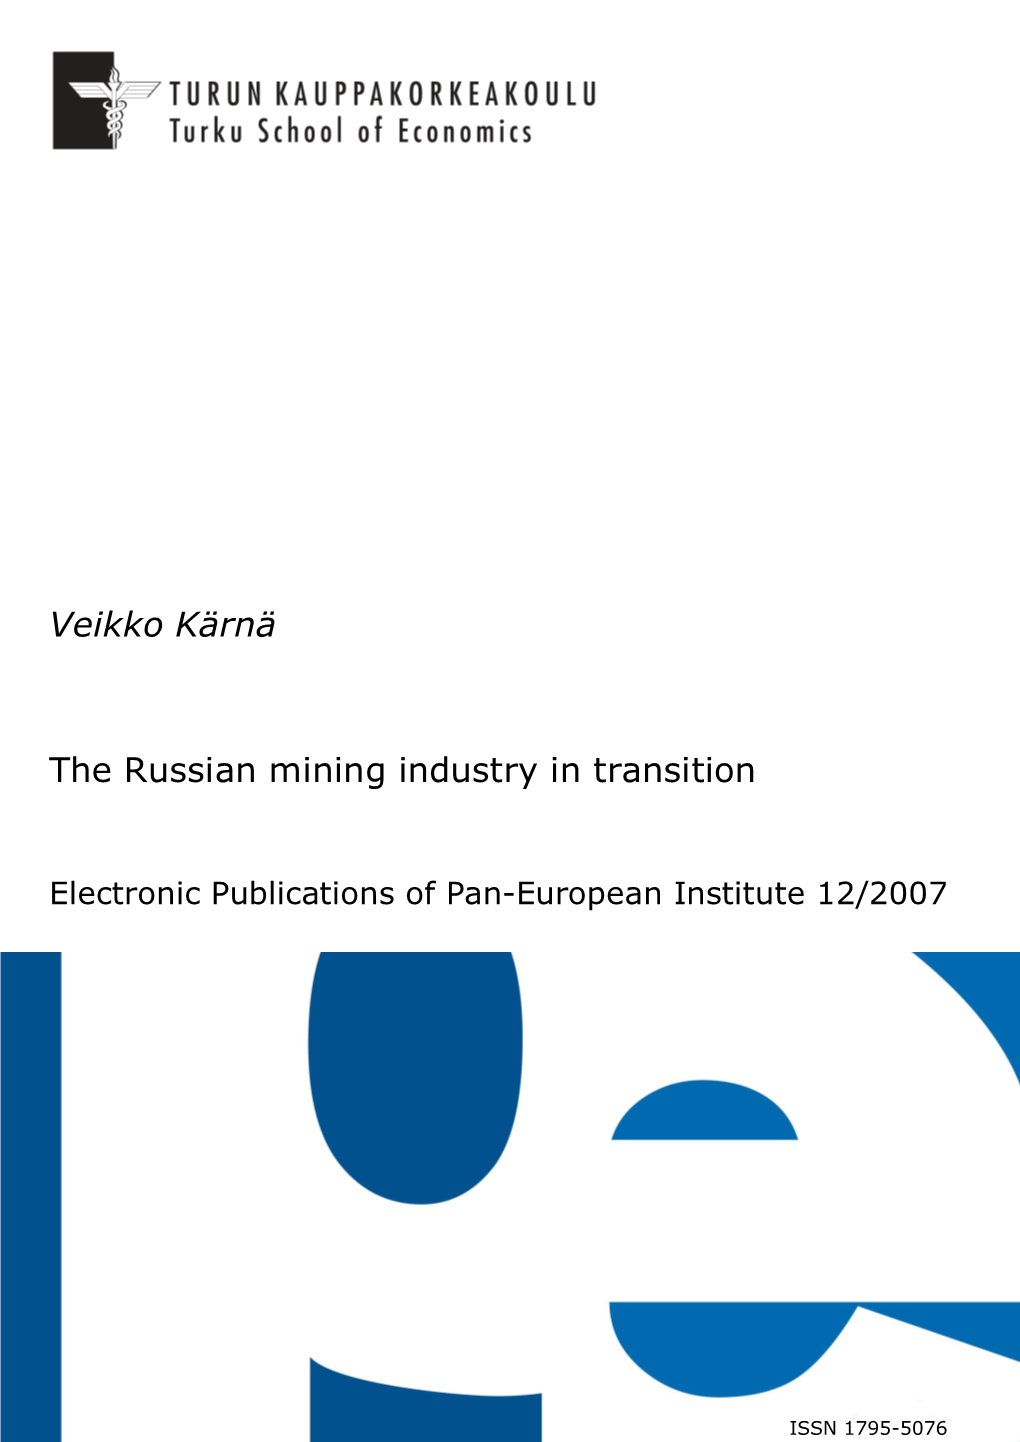 Veikko Kärnä the Russian Mining Industry in Transition